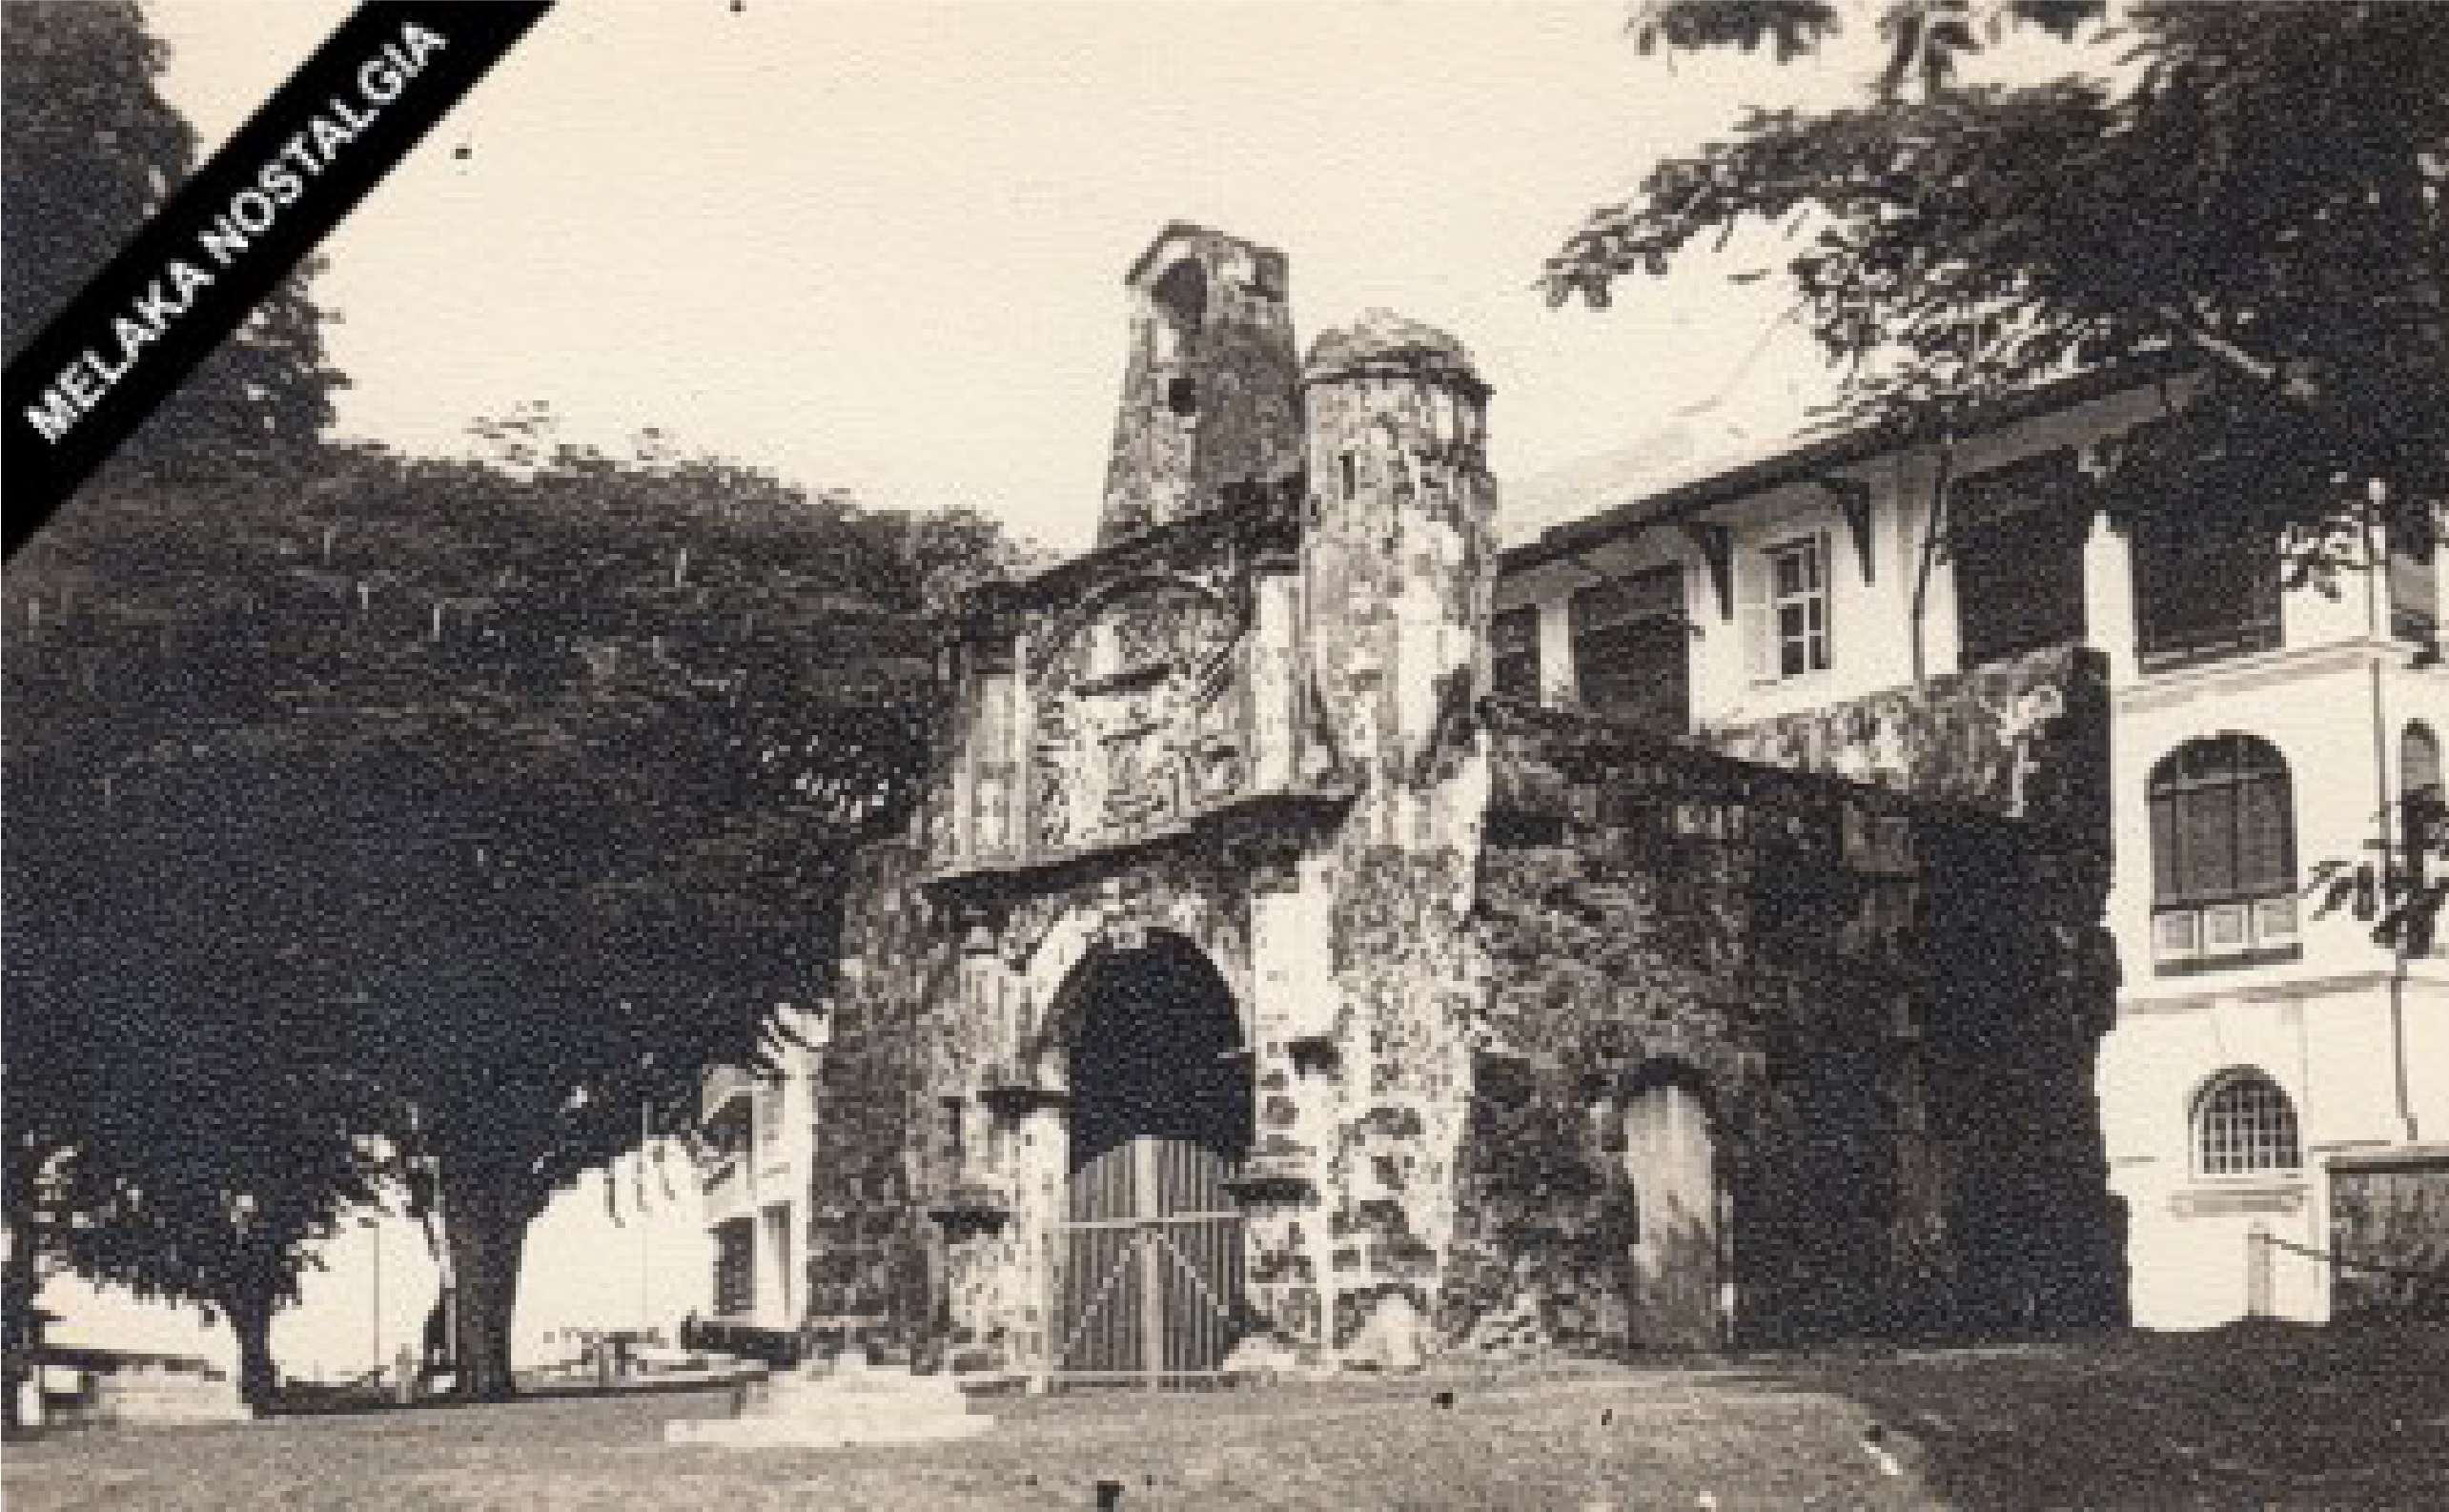 Porta De Santiago circa 1930 (source: Melaka Nostalgia)